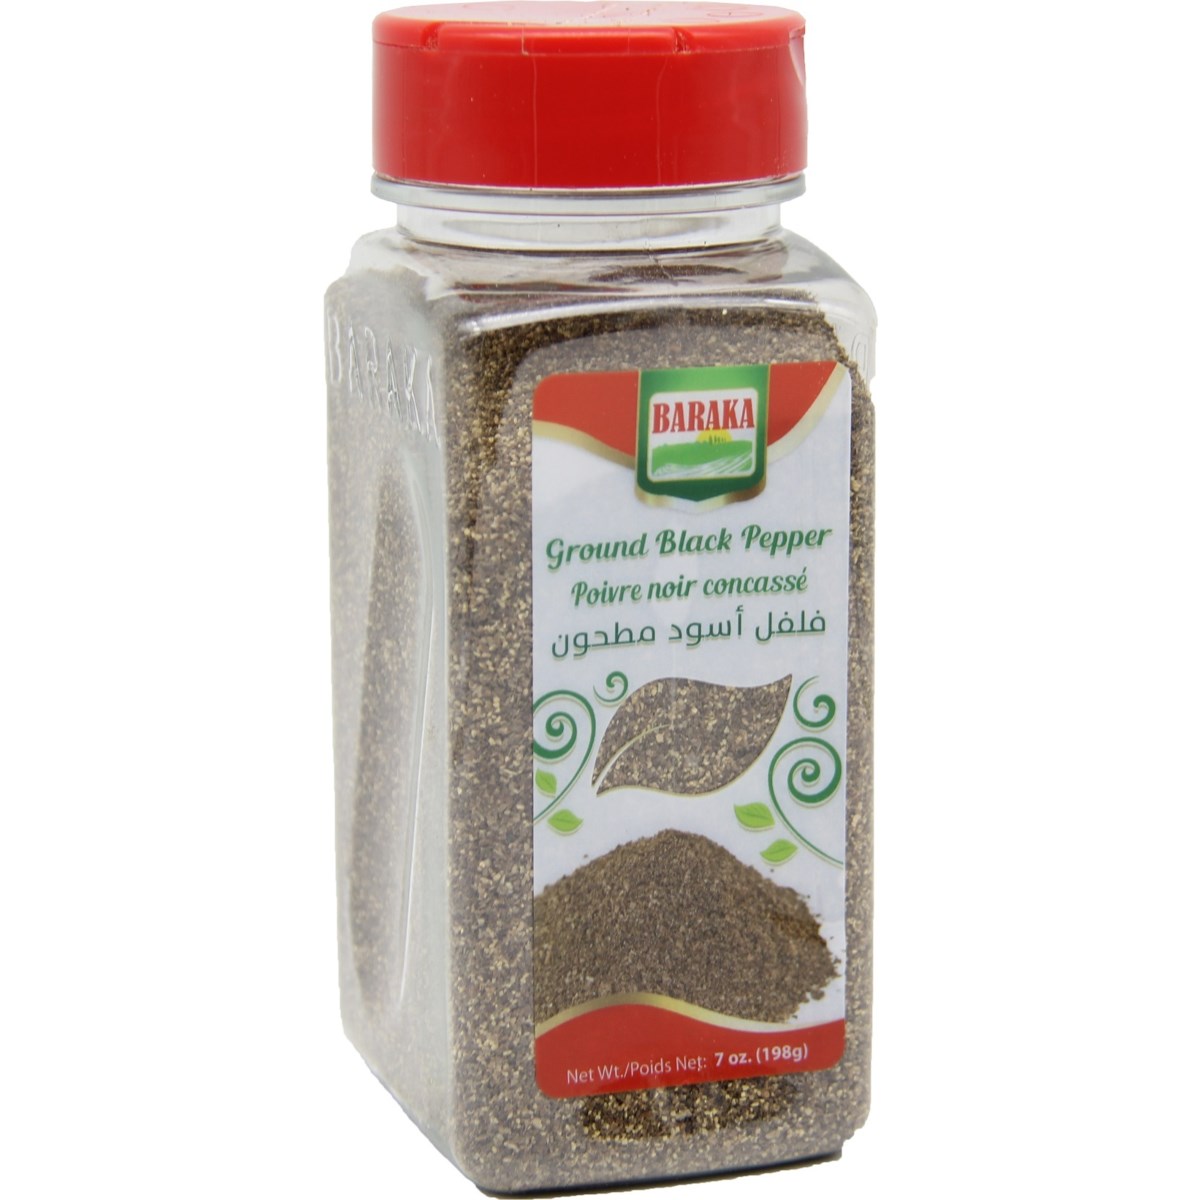 Ground Black Pepper Spice in plastic tub "Baraka"